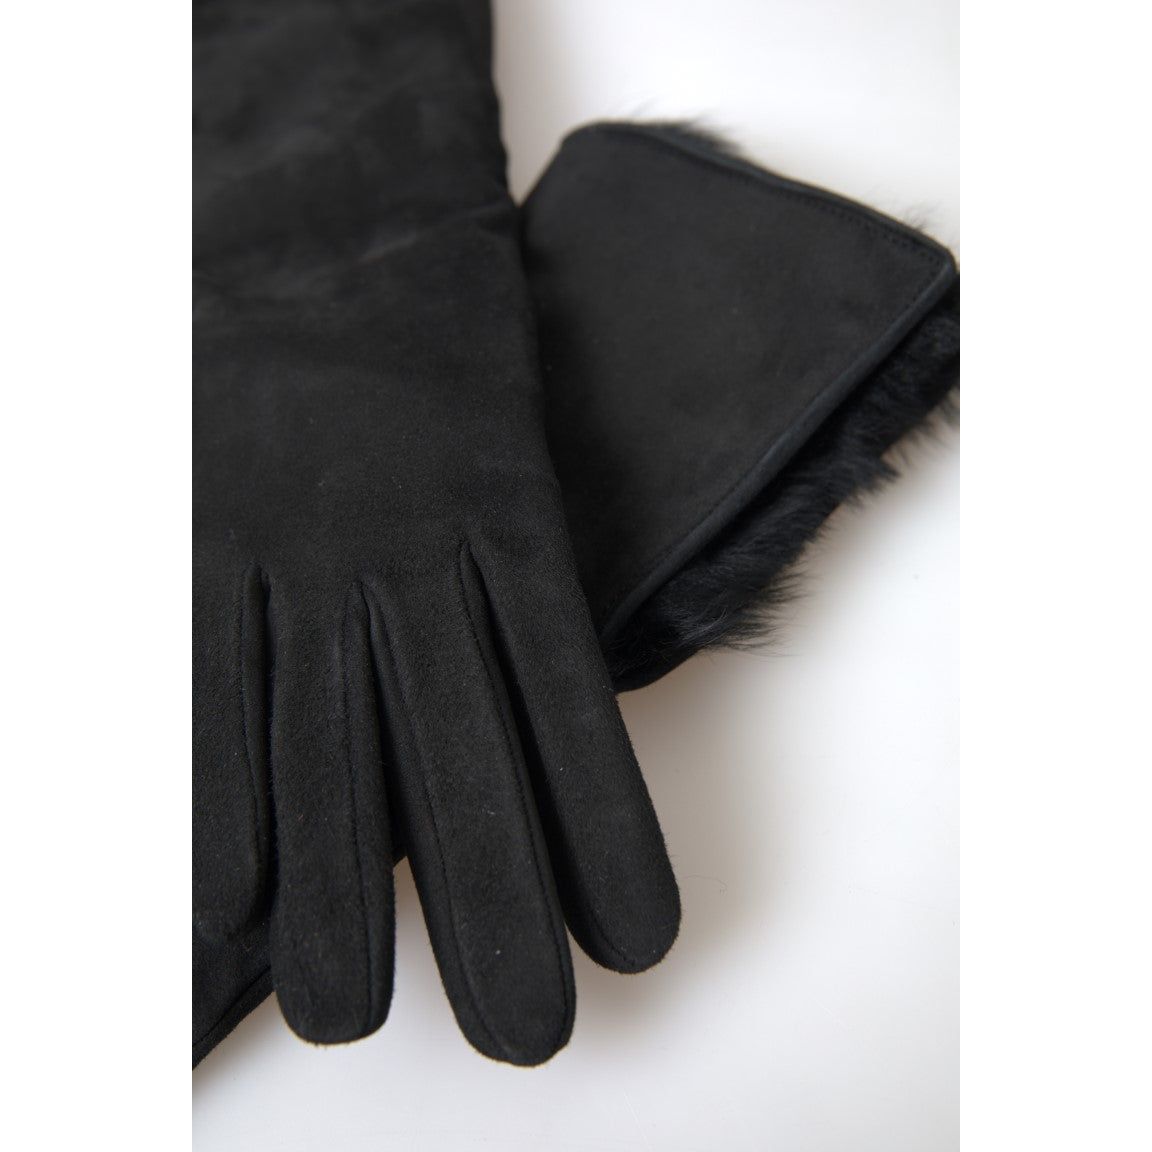 Dolce & Gabbana Elegant Leather Elbow Length Gloves with Fur Trim black-leather-fur-elbow-length-gloves